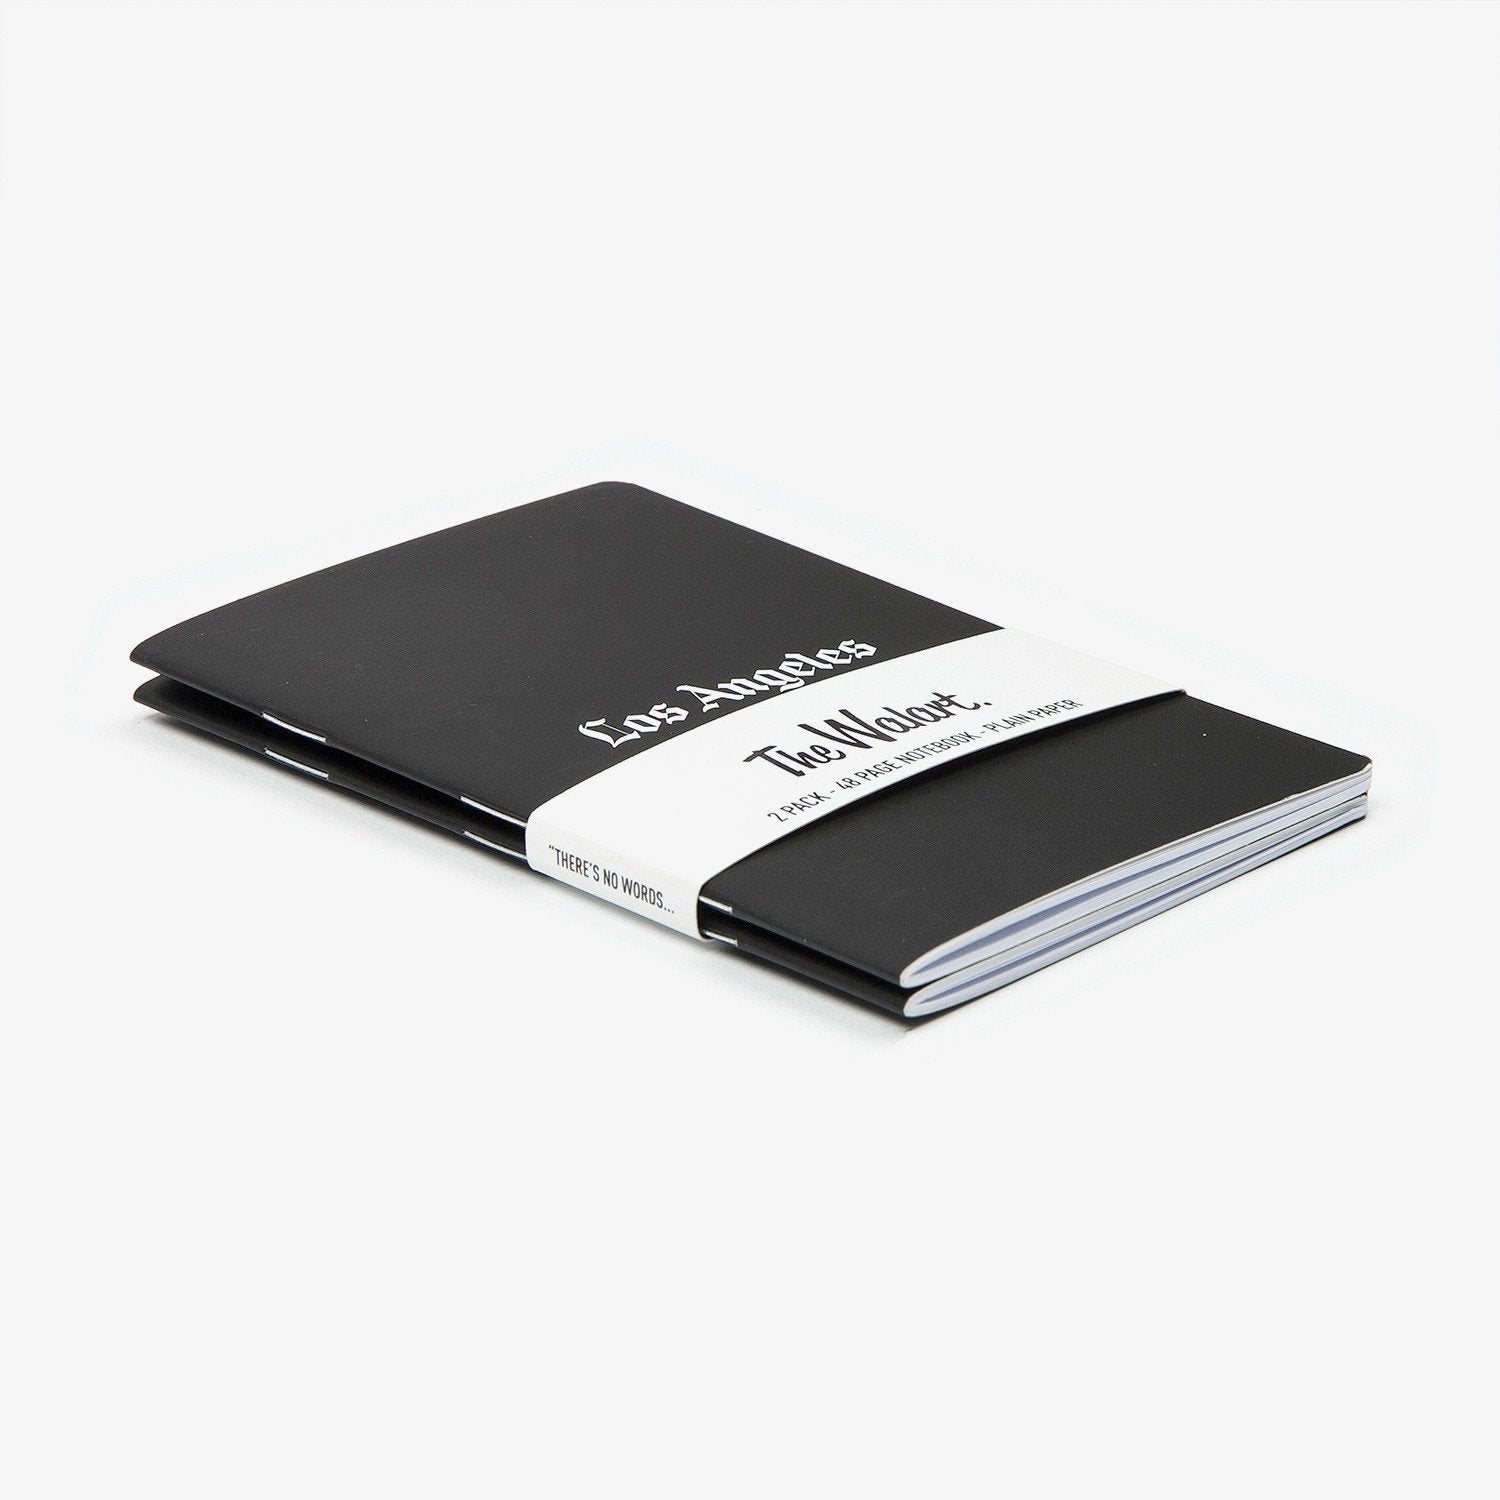 LA Notebook 2PK - The Walart - Paper Wallet